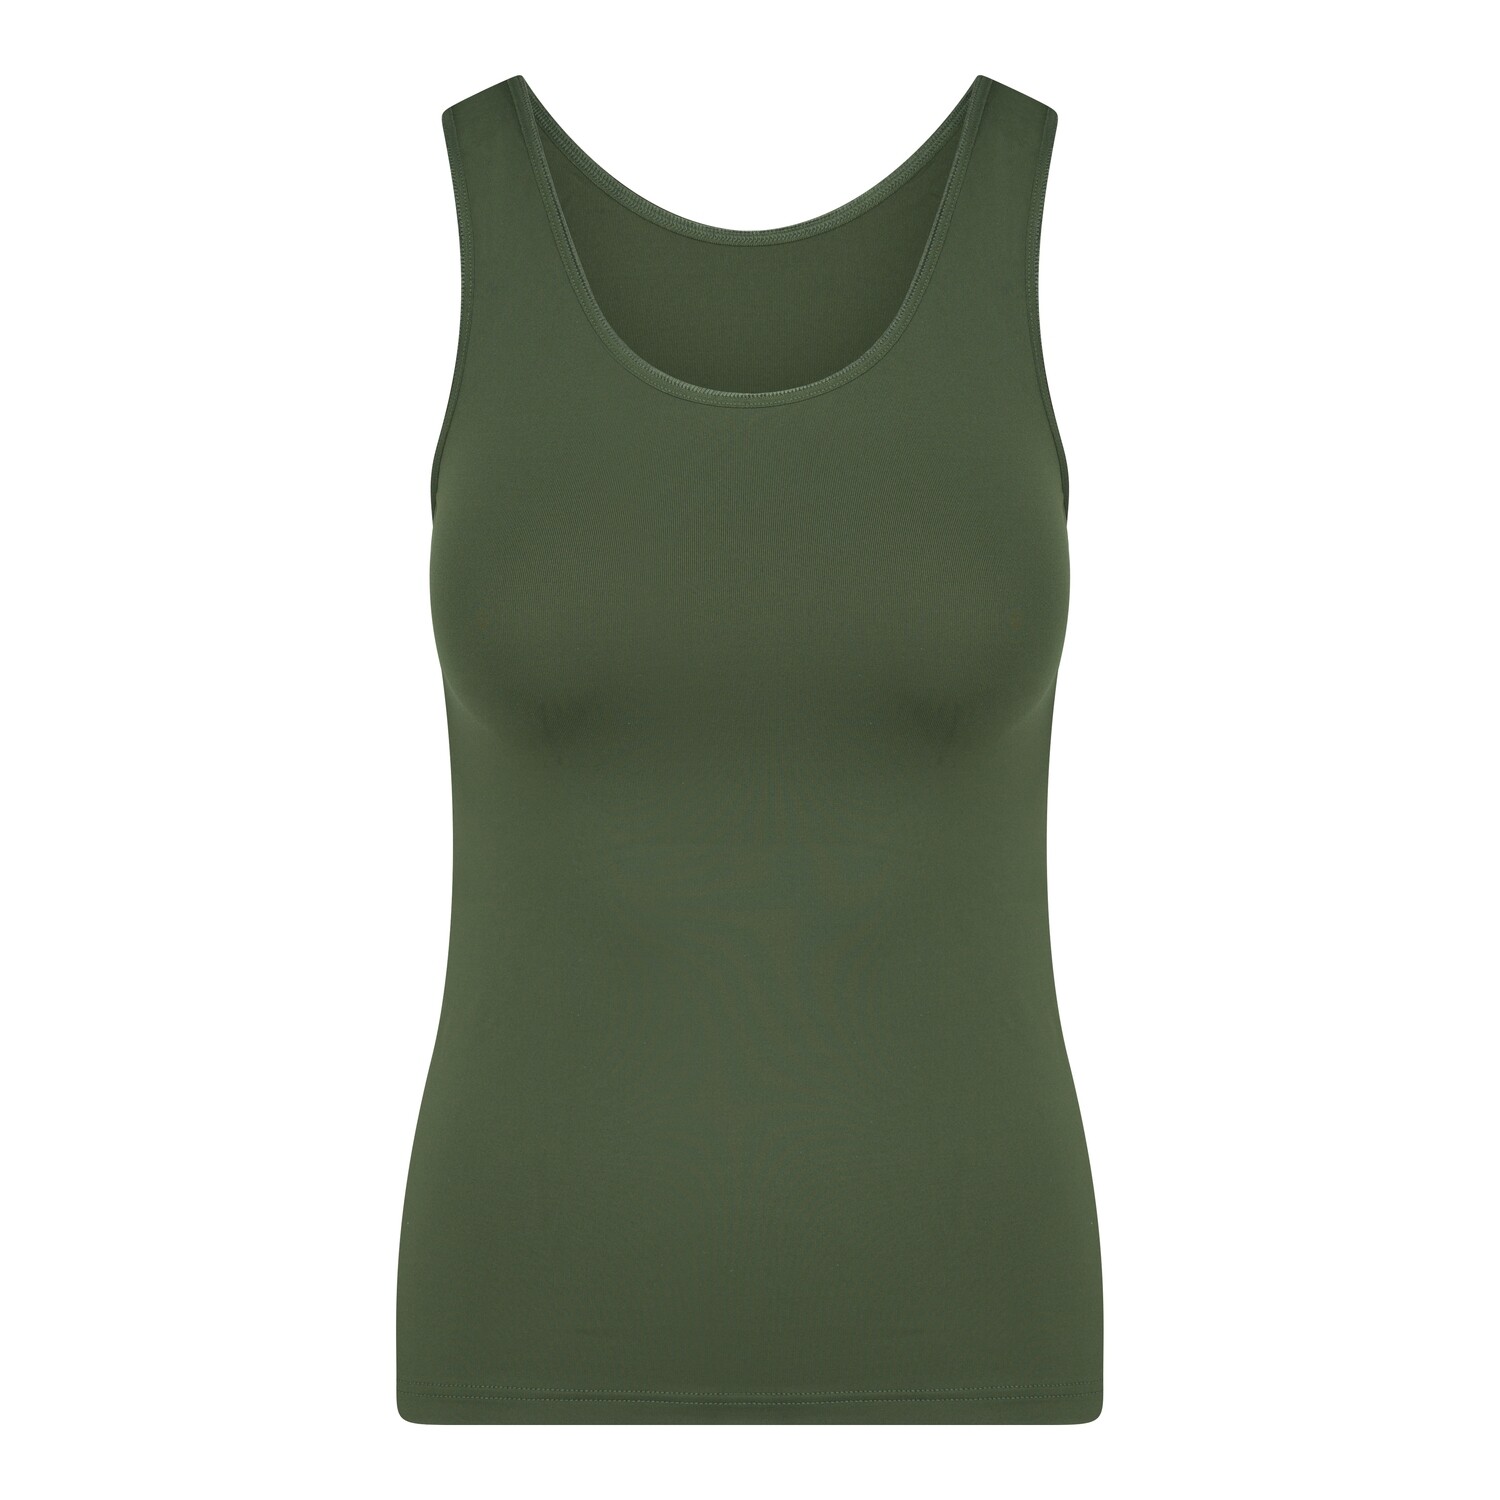 (07-528) Dames hemd Elegance donker groen XXL, Size: XXL, Color: dark green